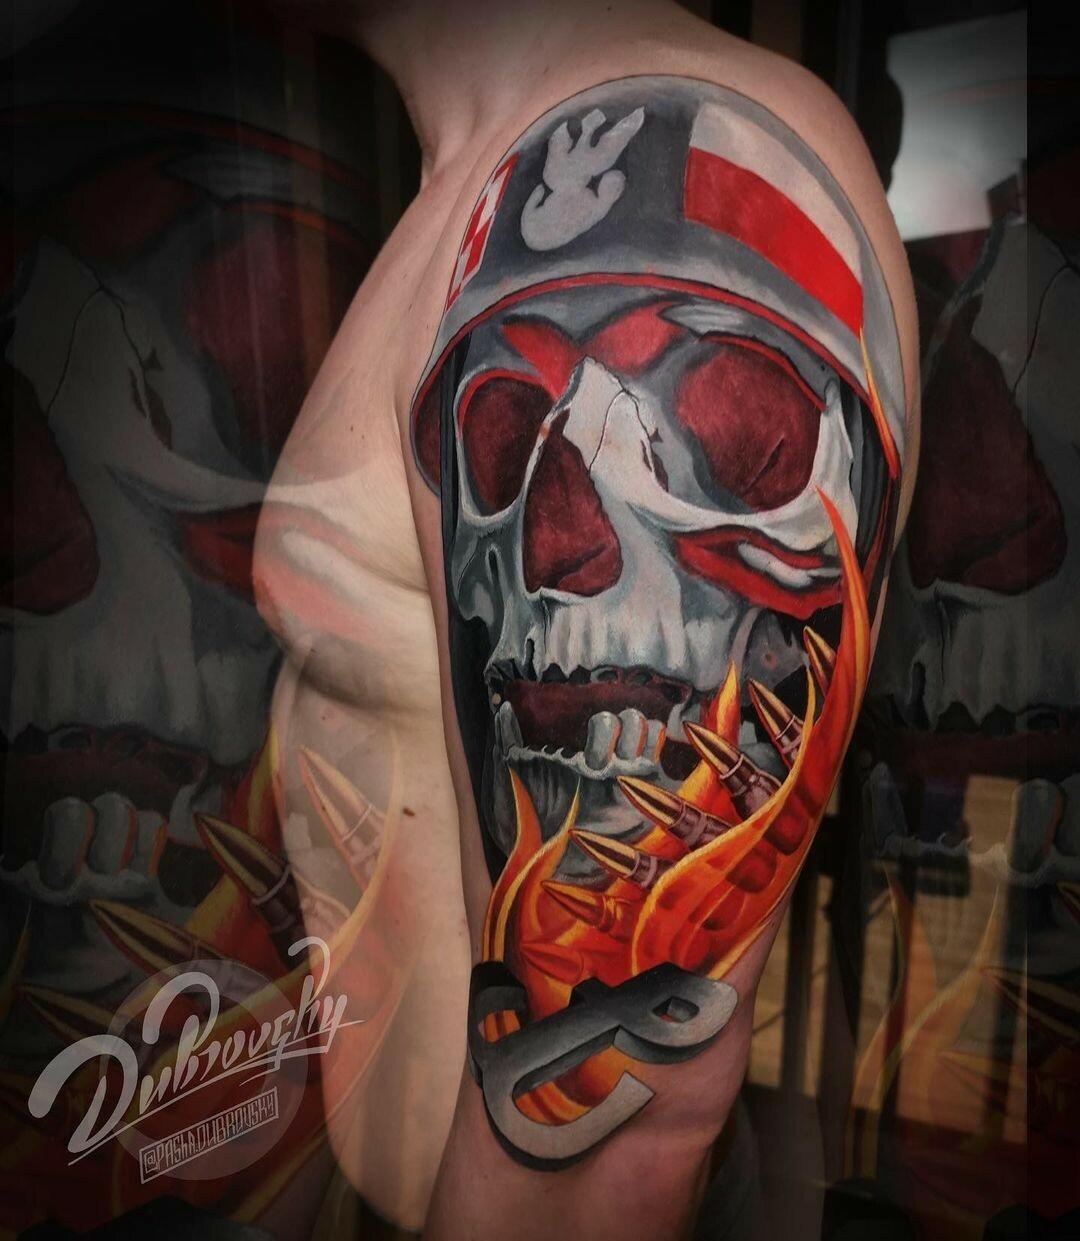 Inksearch tattoo Pasha Dubrovskii